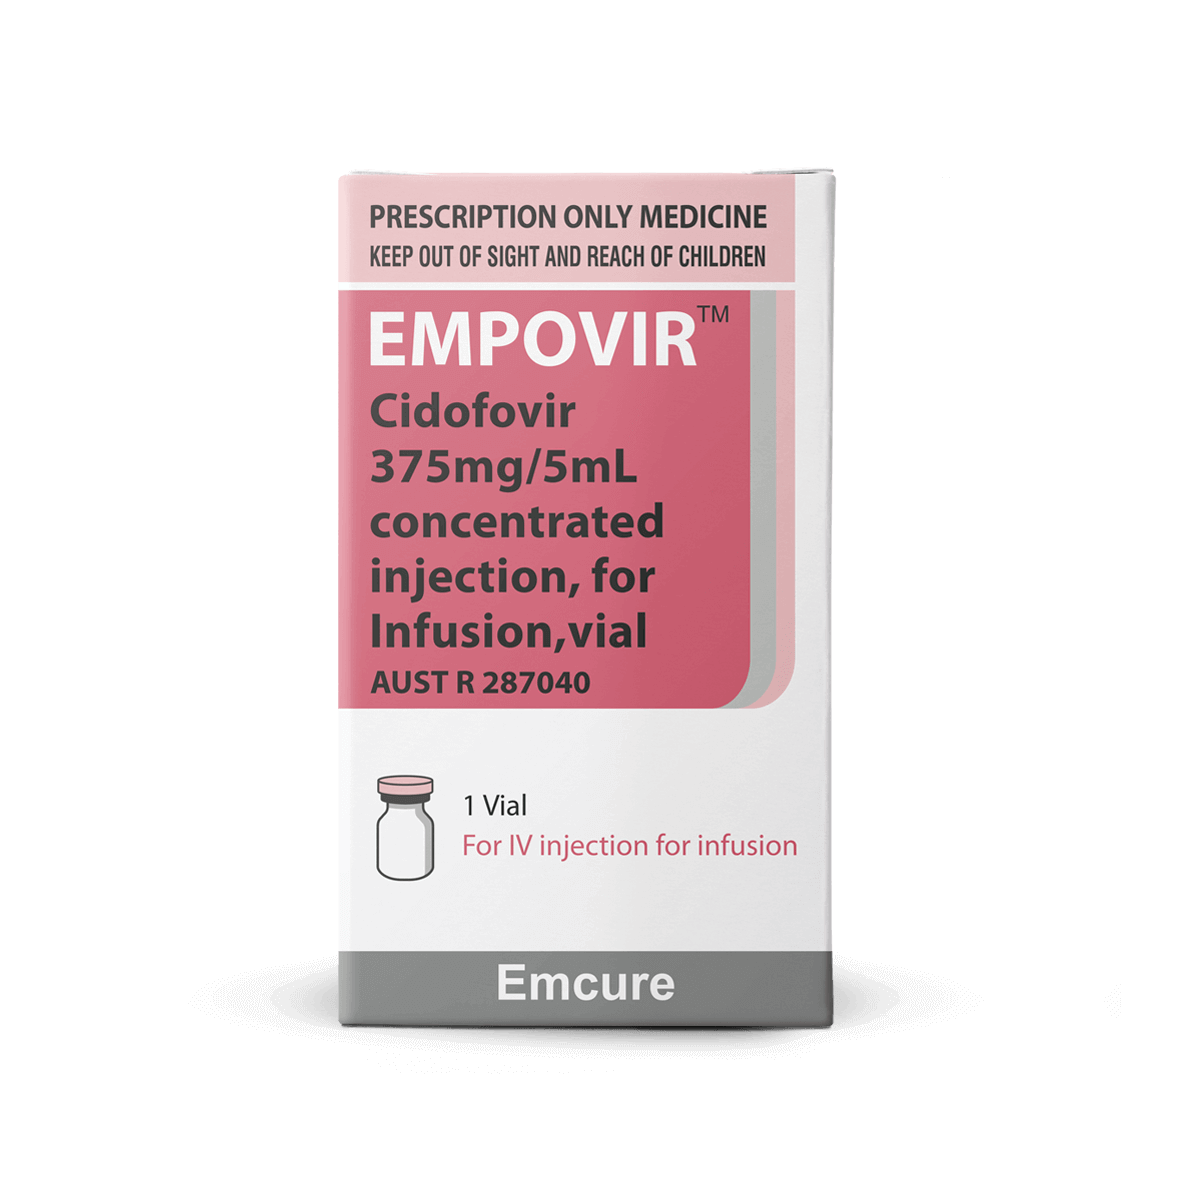 Empovir 375mg/5mL Injection (cidofovir)